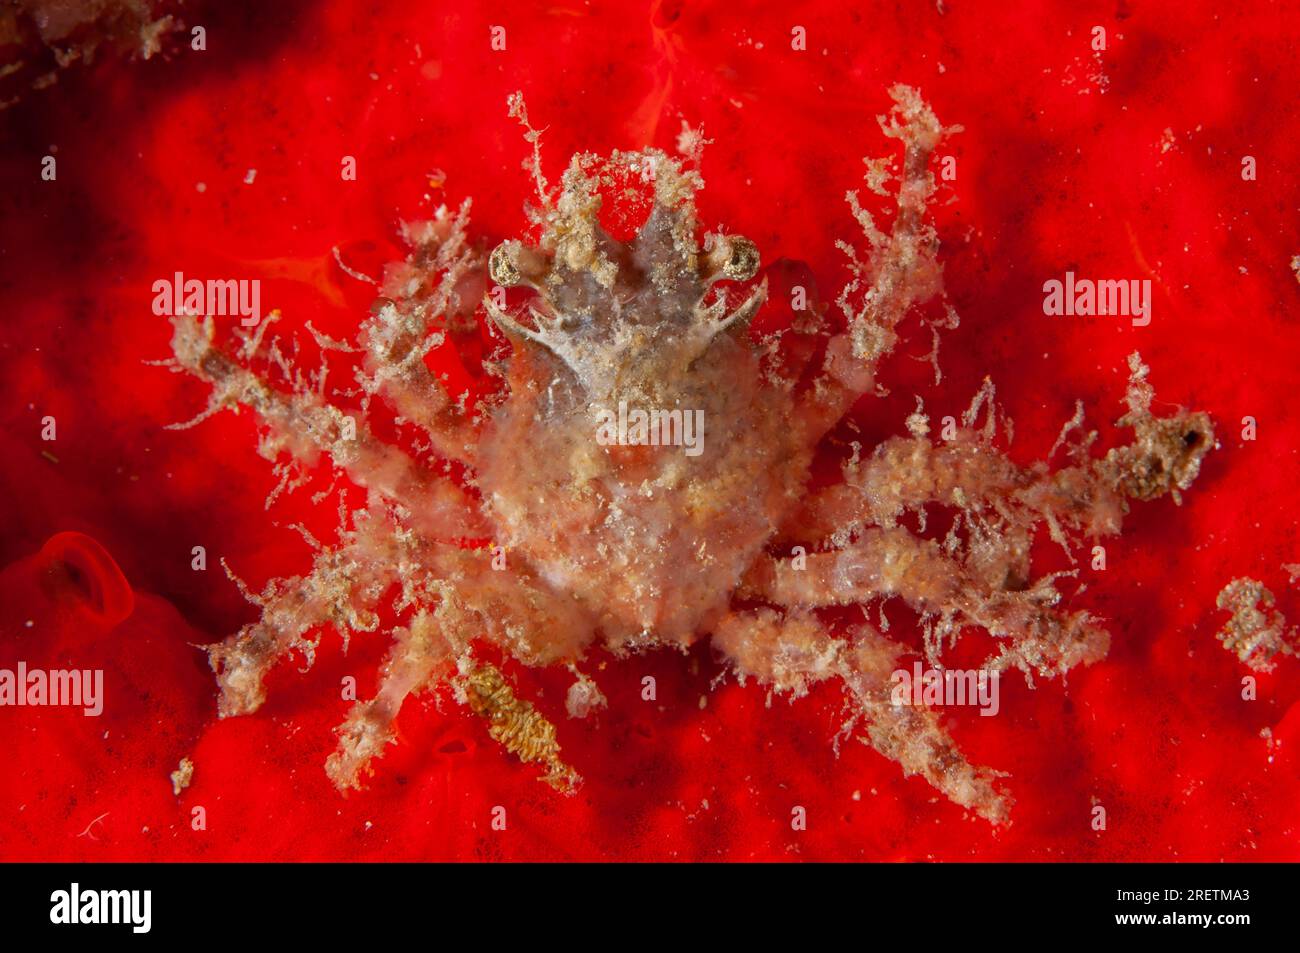 Decorator Crab, Majidae  Family, on Spongem Porifera Phylum, Saonex Pier, Dampier Strait, Raja Ampat, West Papua, Indonesia Stock Photo